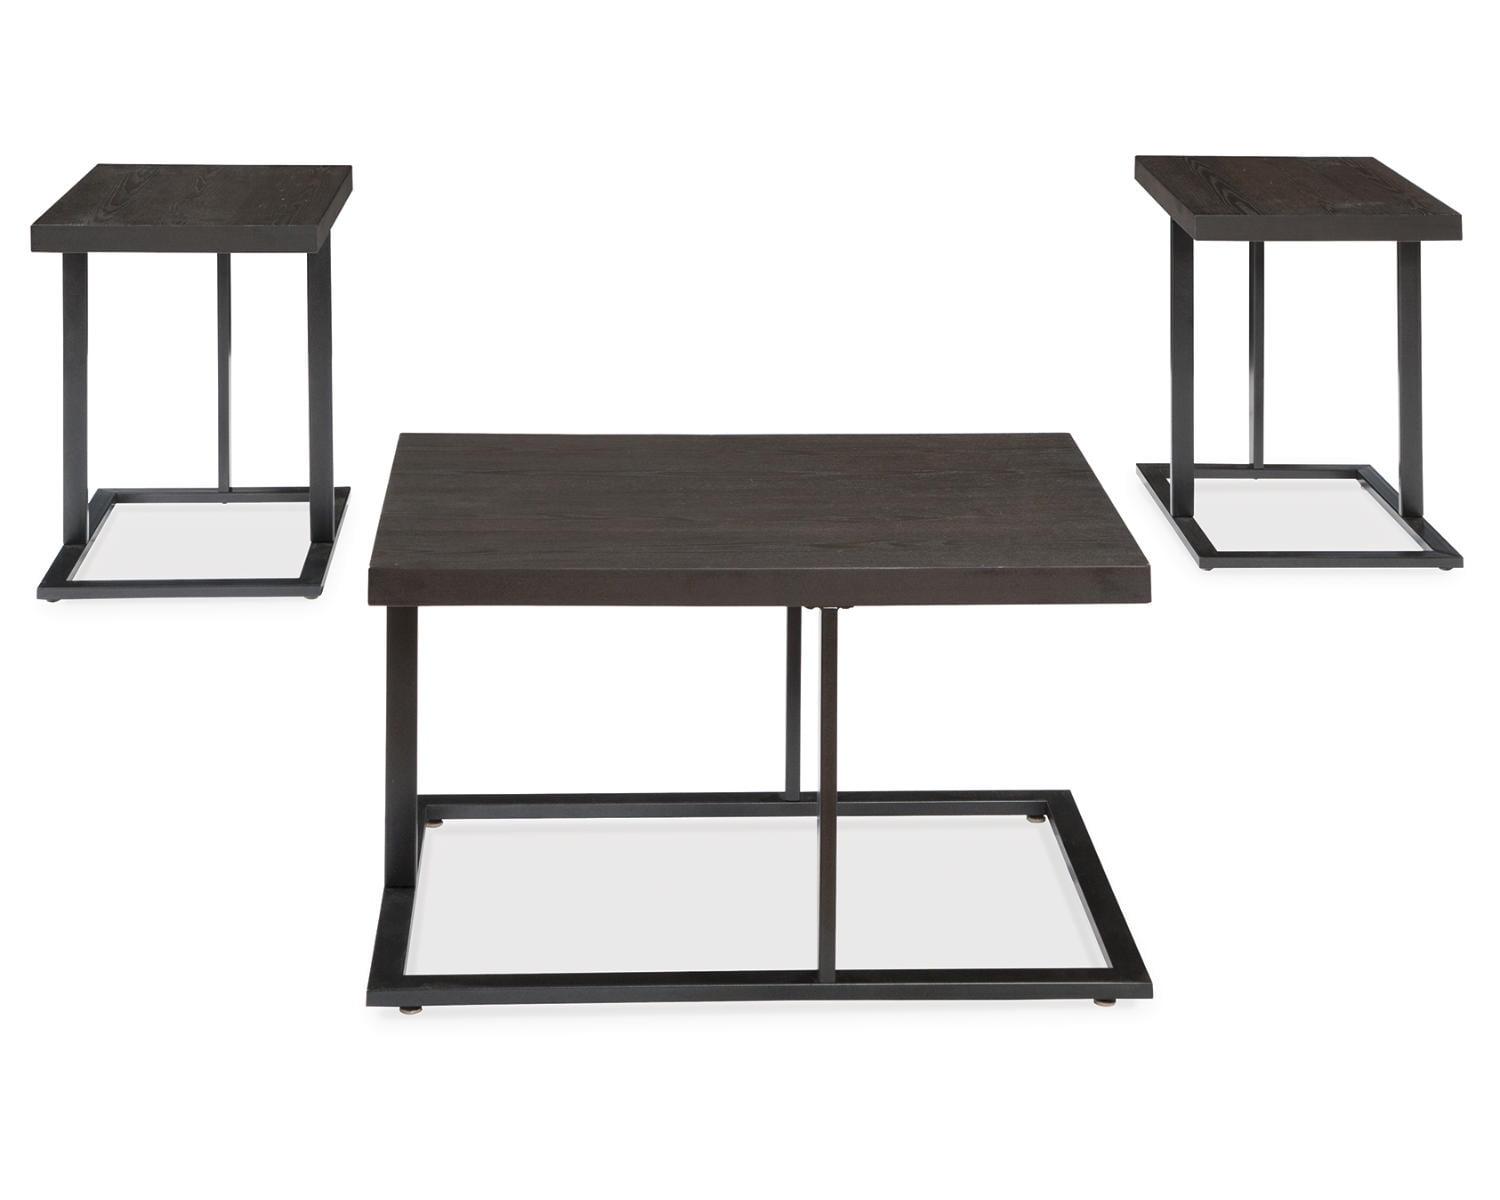 Airdon Bronze & Black Cantilevered Coffee Table Set